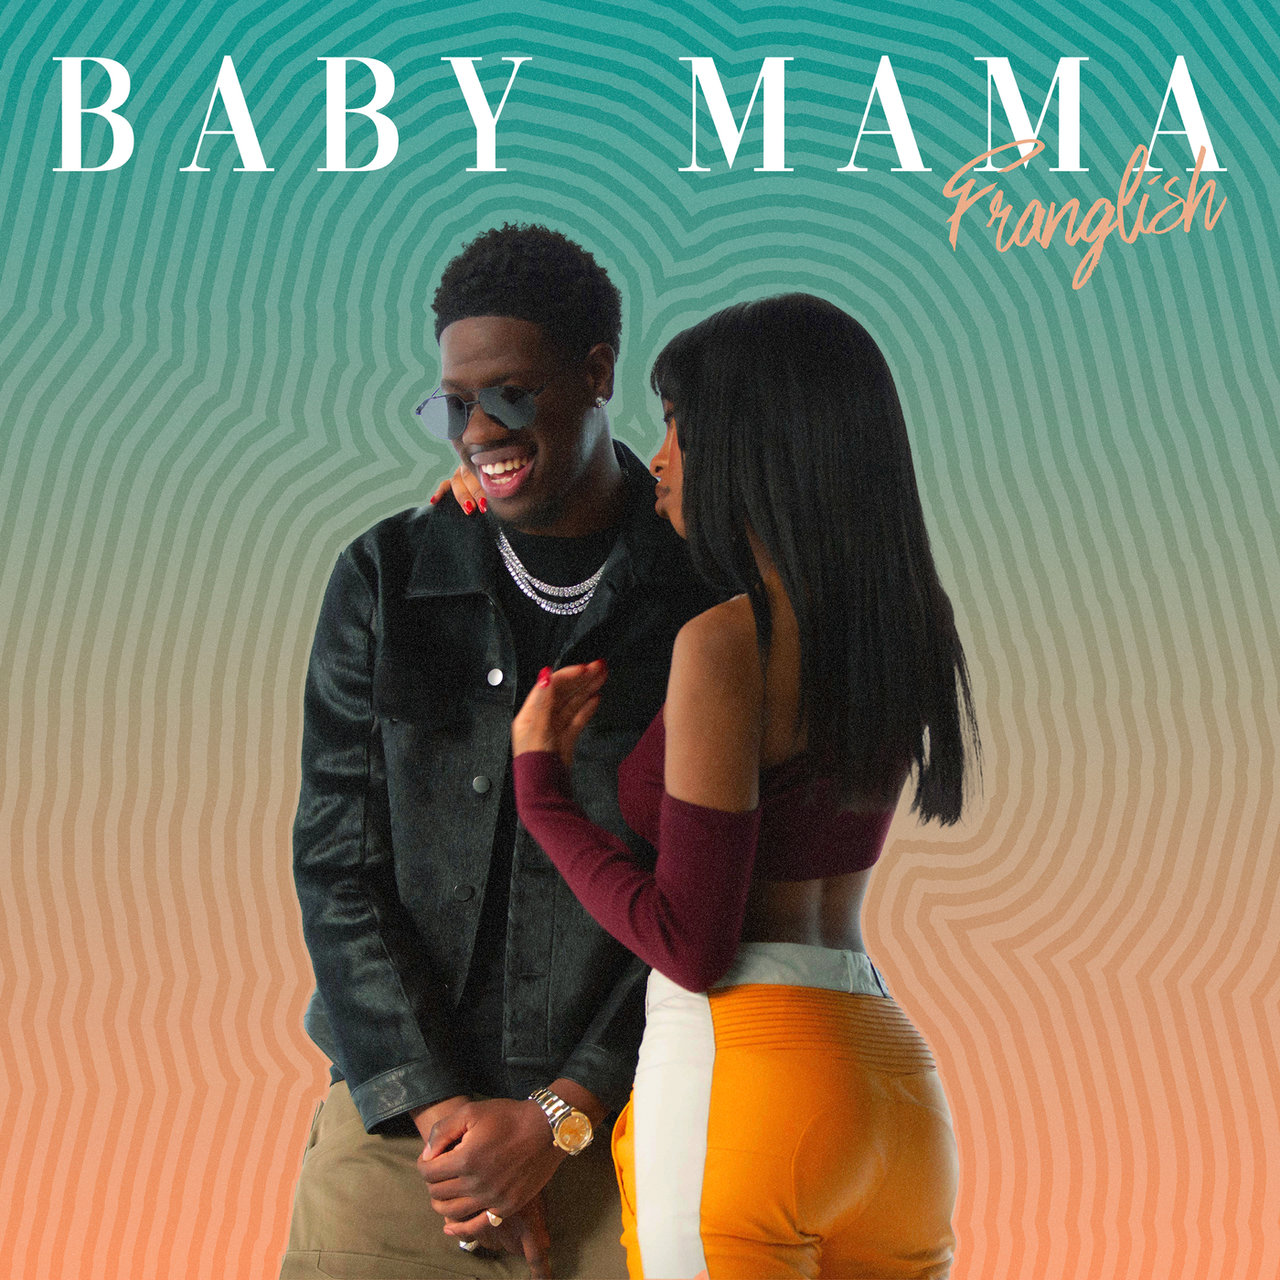 Franglish - Baby Mama (Cover)